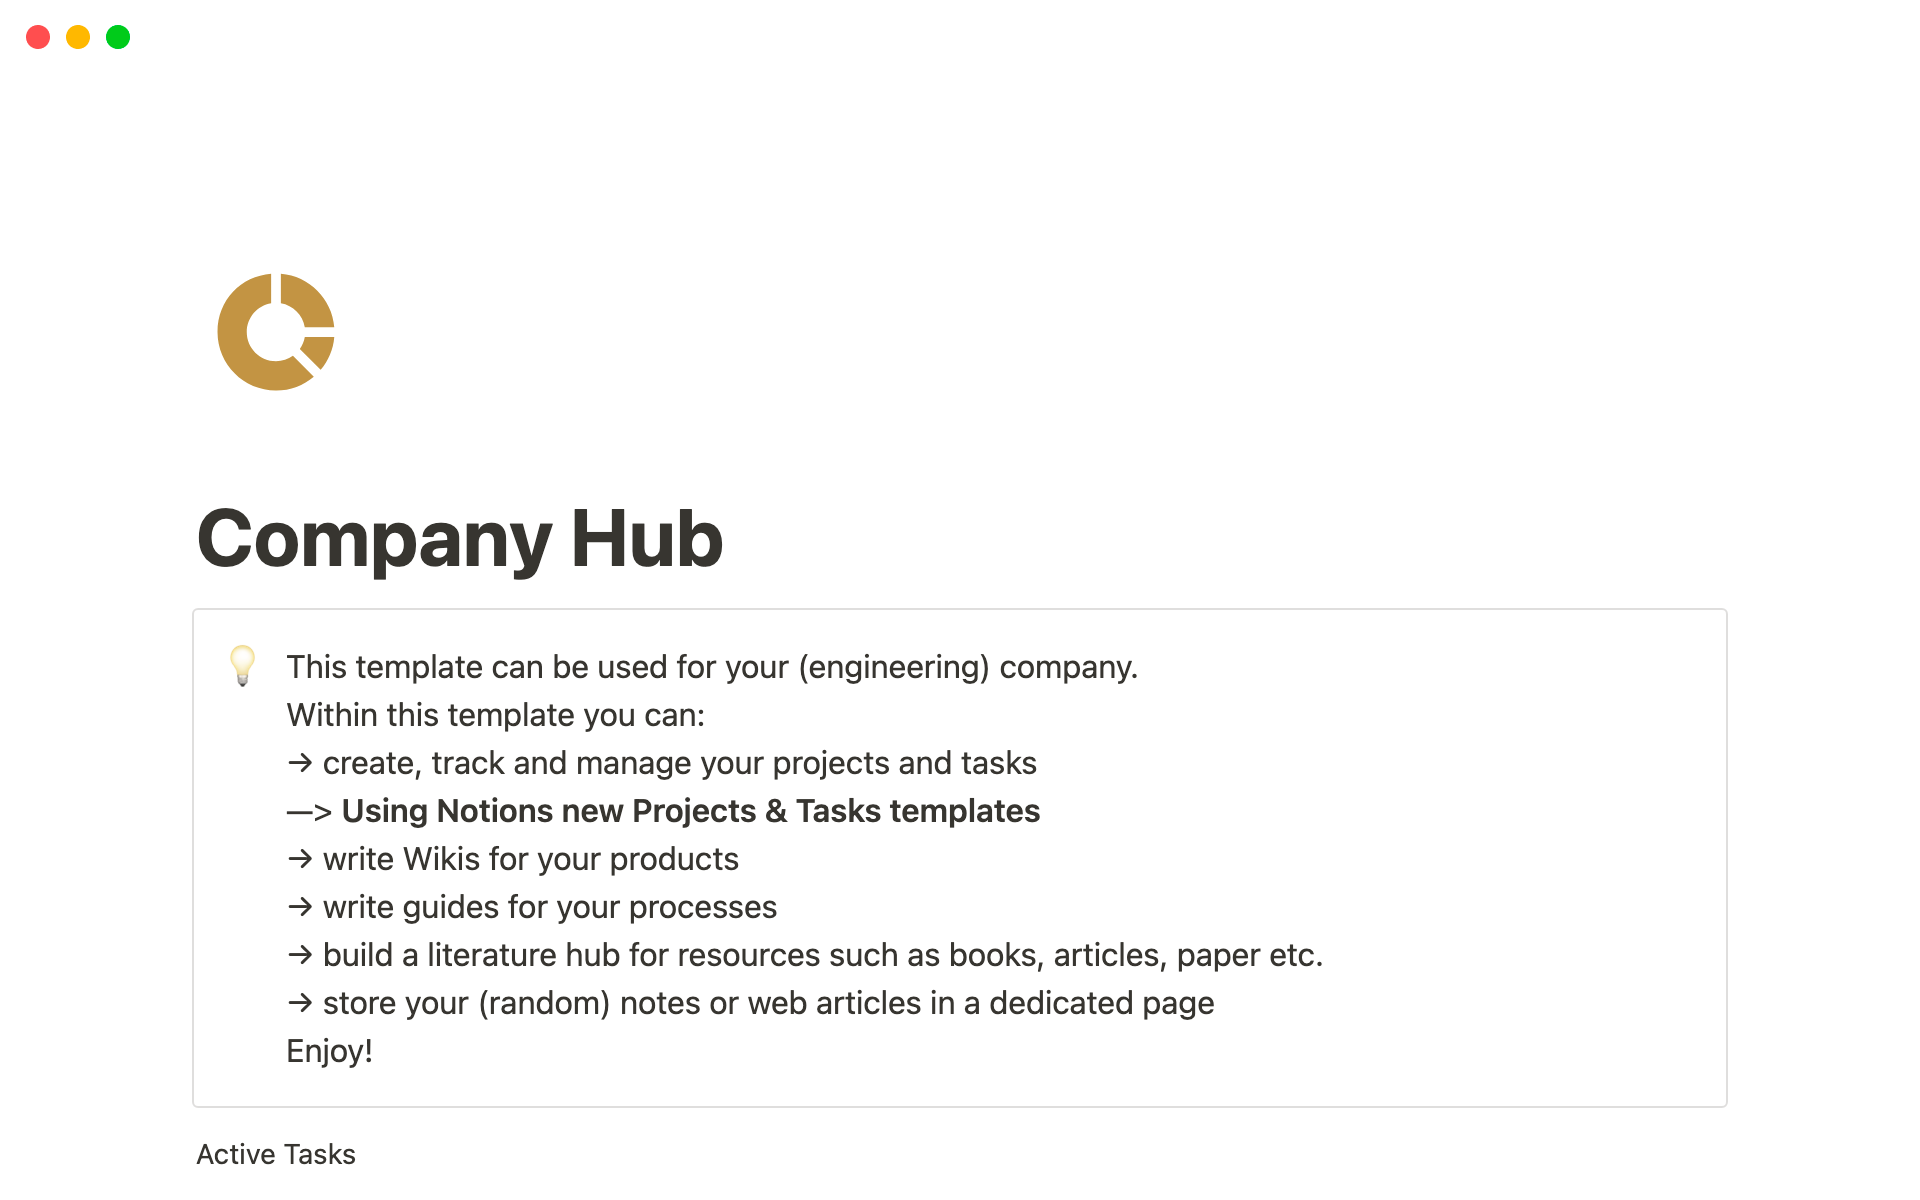 Vista previa de plantilla para Your Company Hub